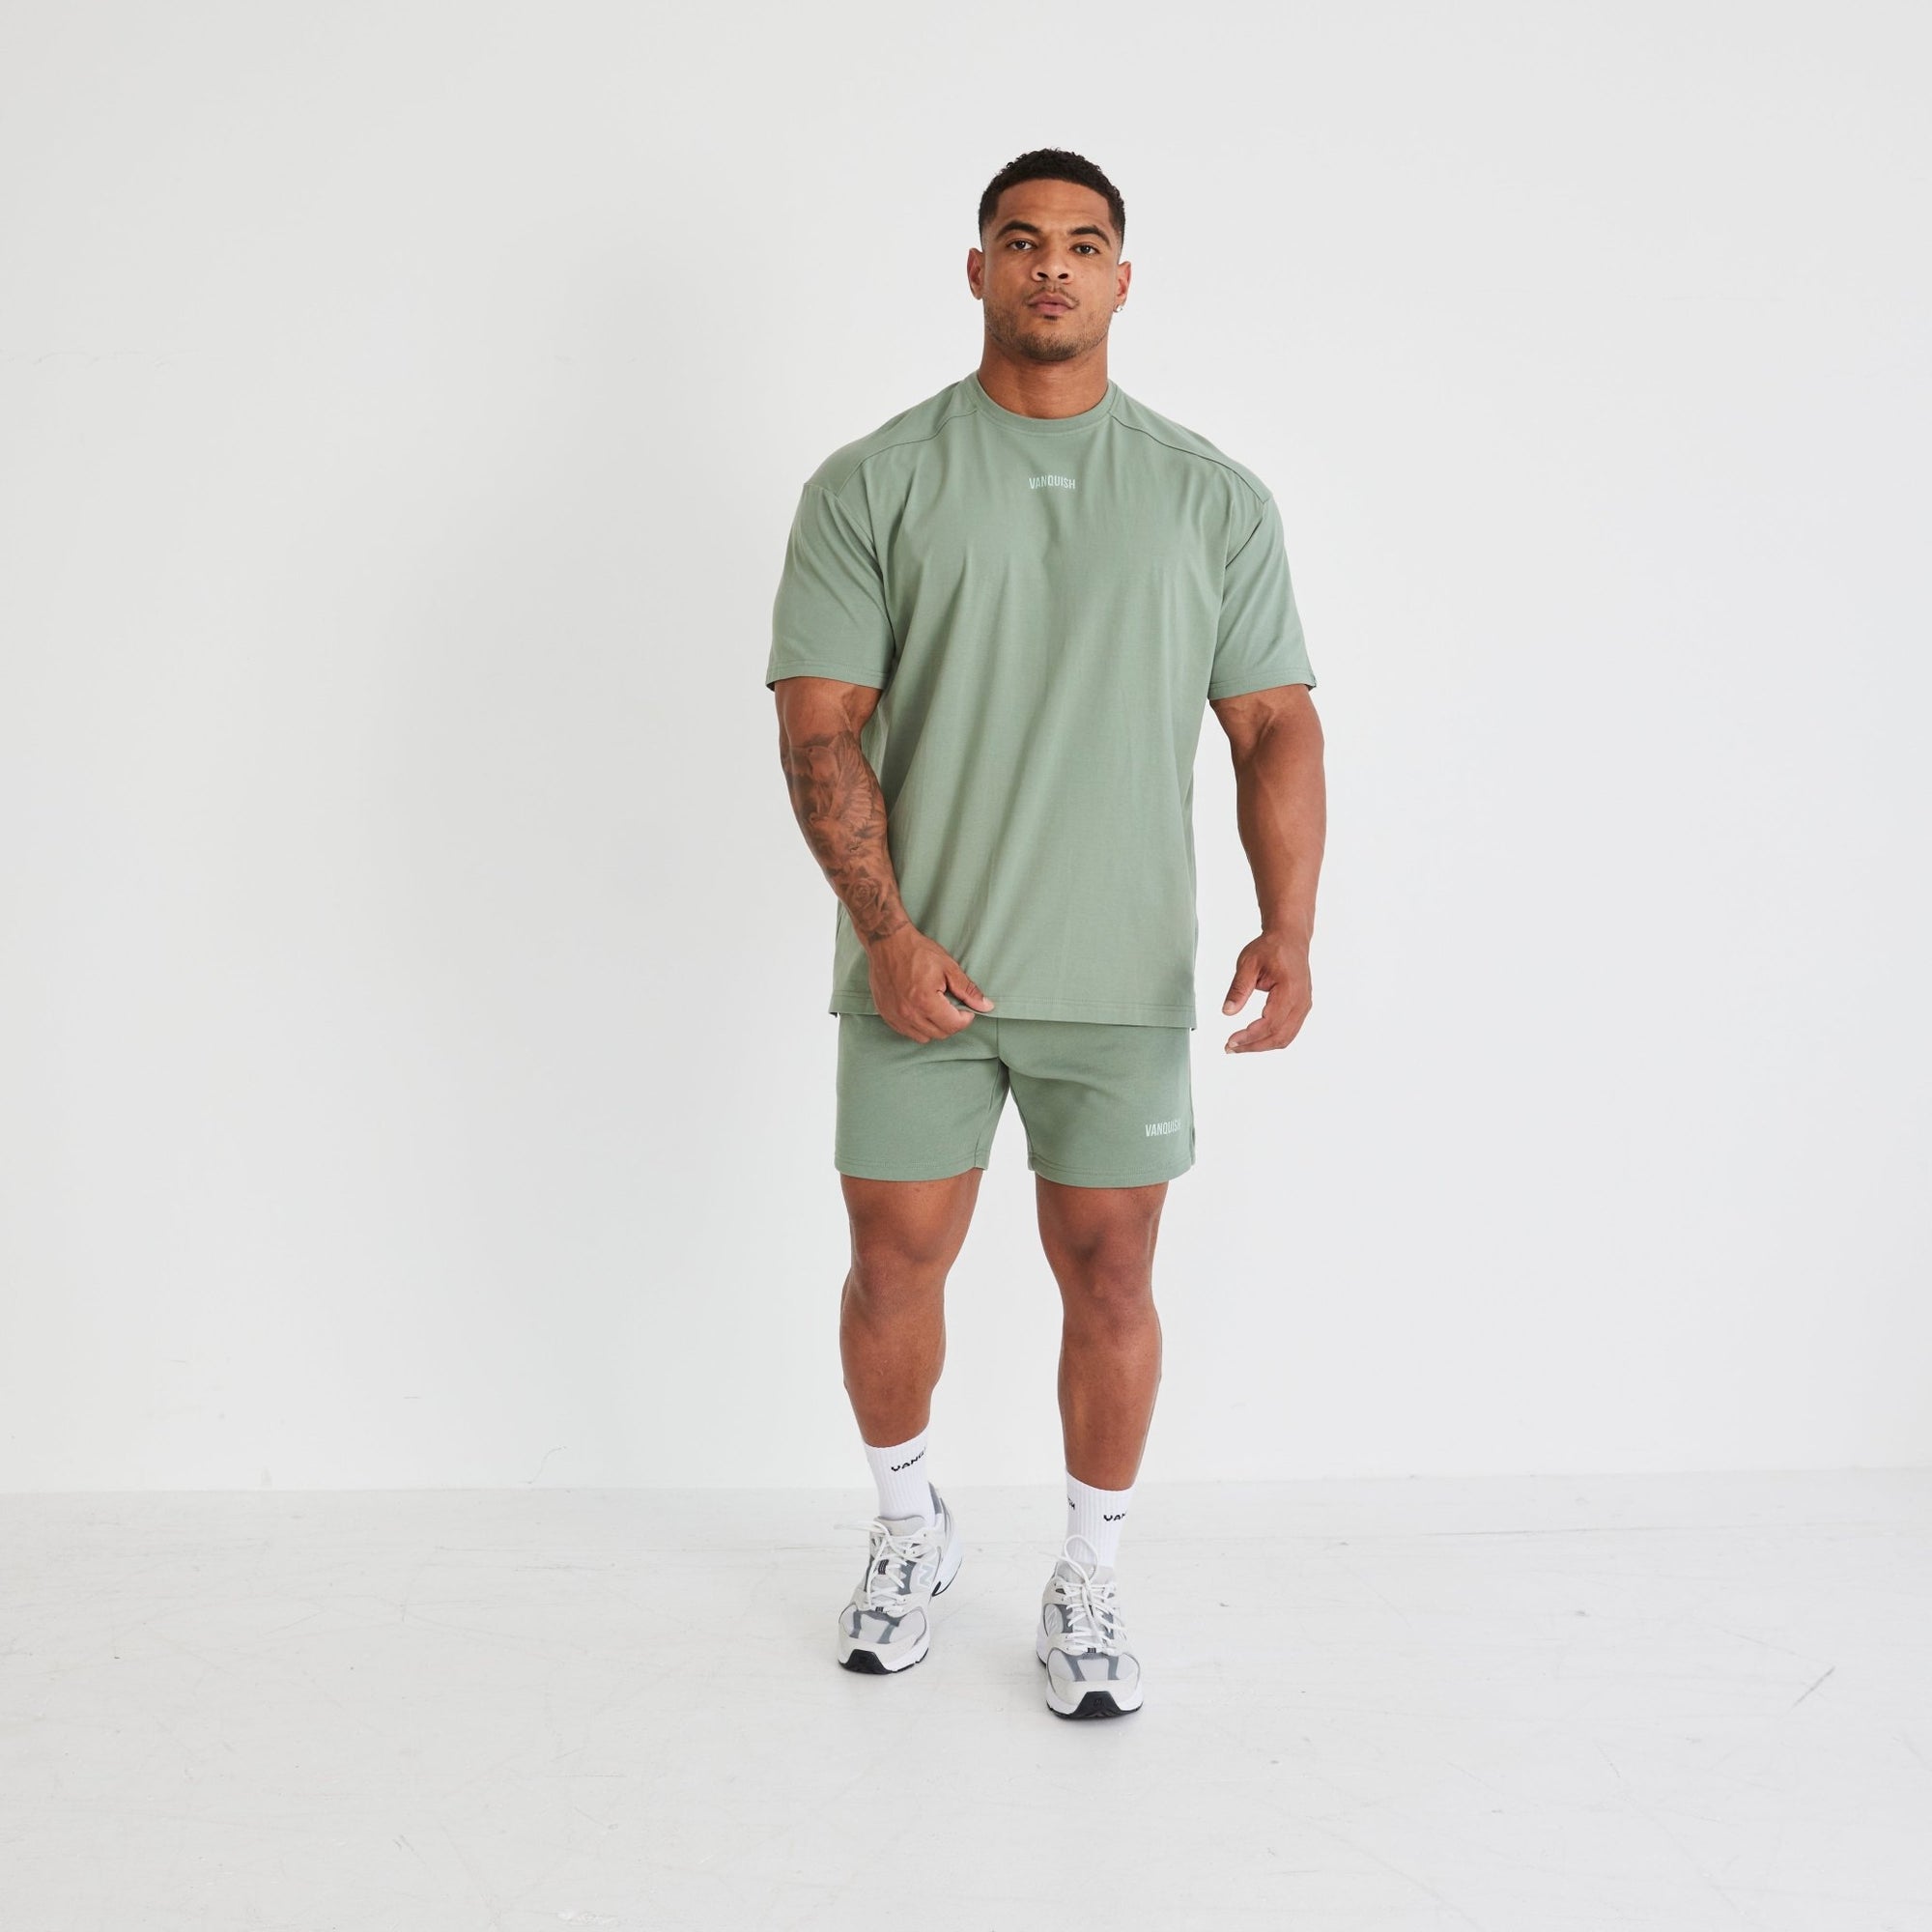 Vanquish Essential Green Oversized T Shirt - Vanquish Fitness